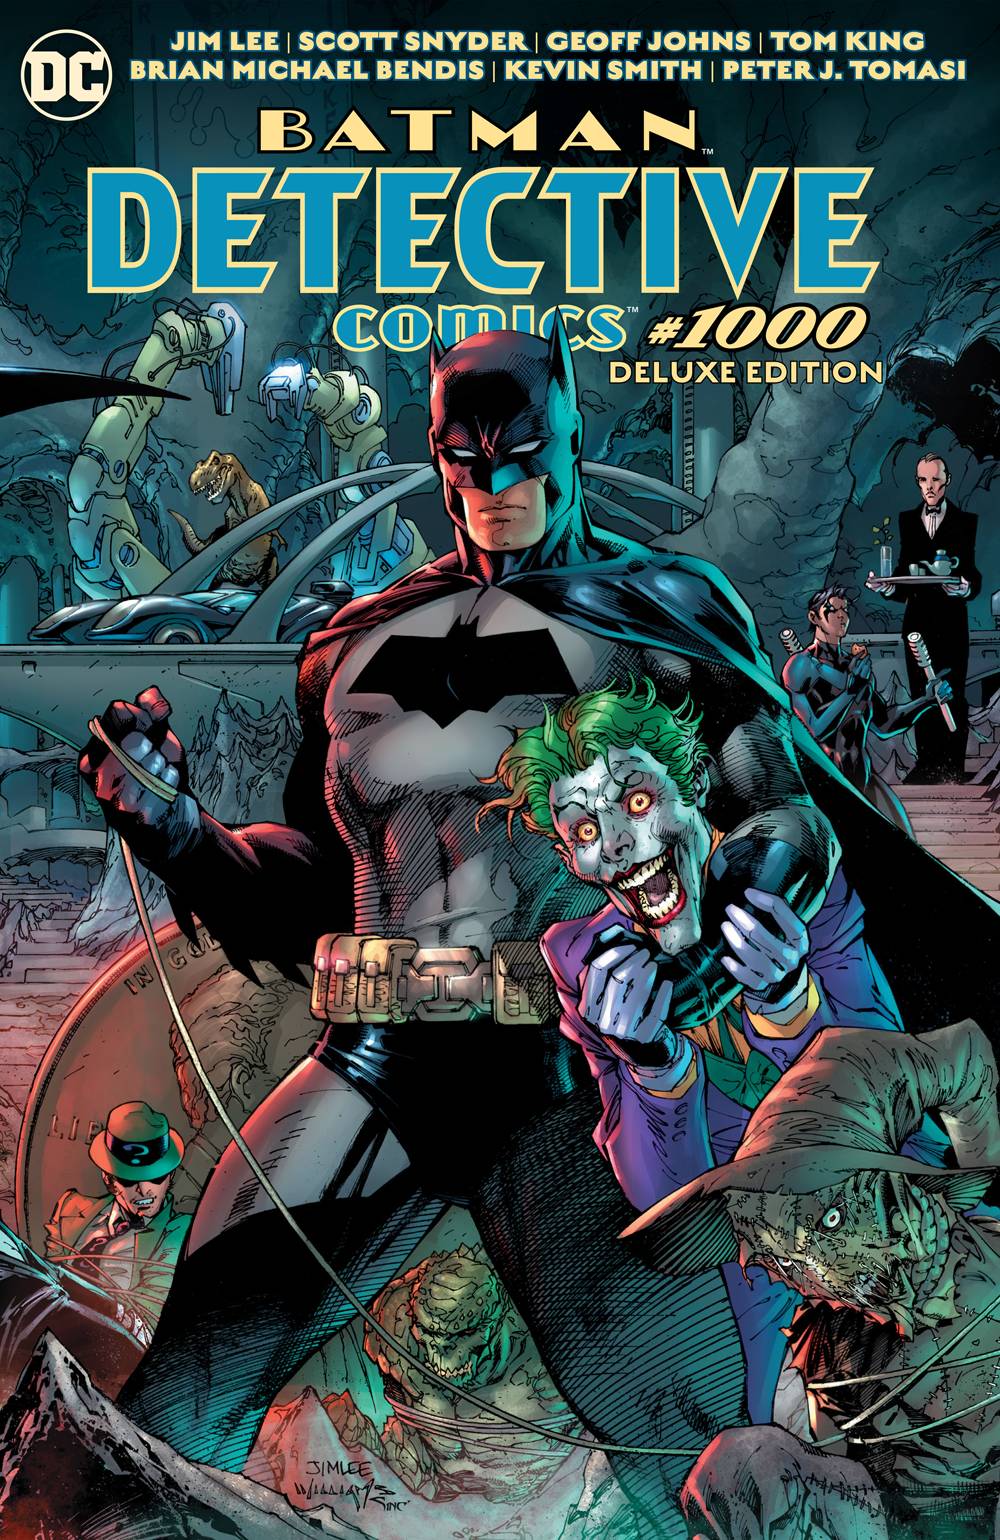 Batman DETECTIVE COMICS #1000 DELUXE ED HC (06/12/2019) DC